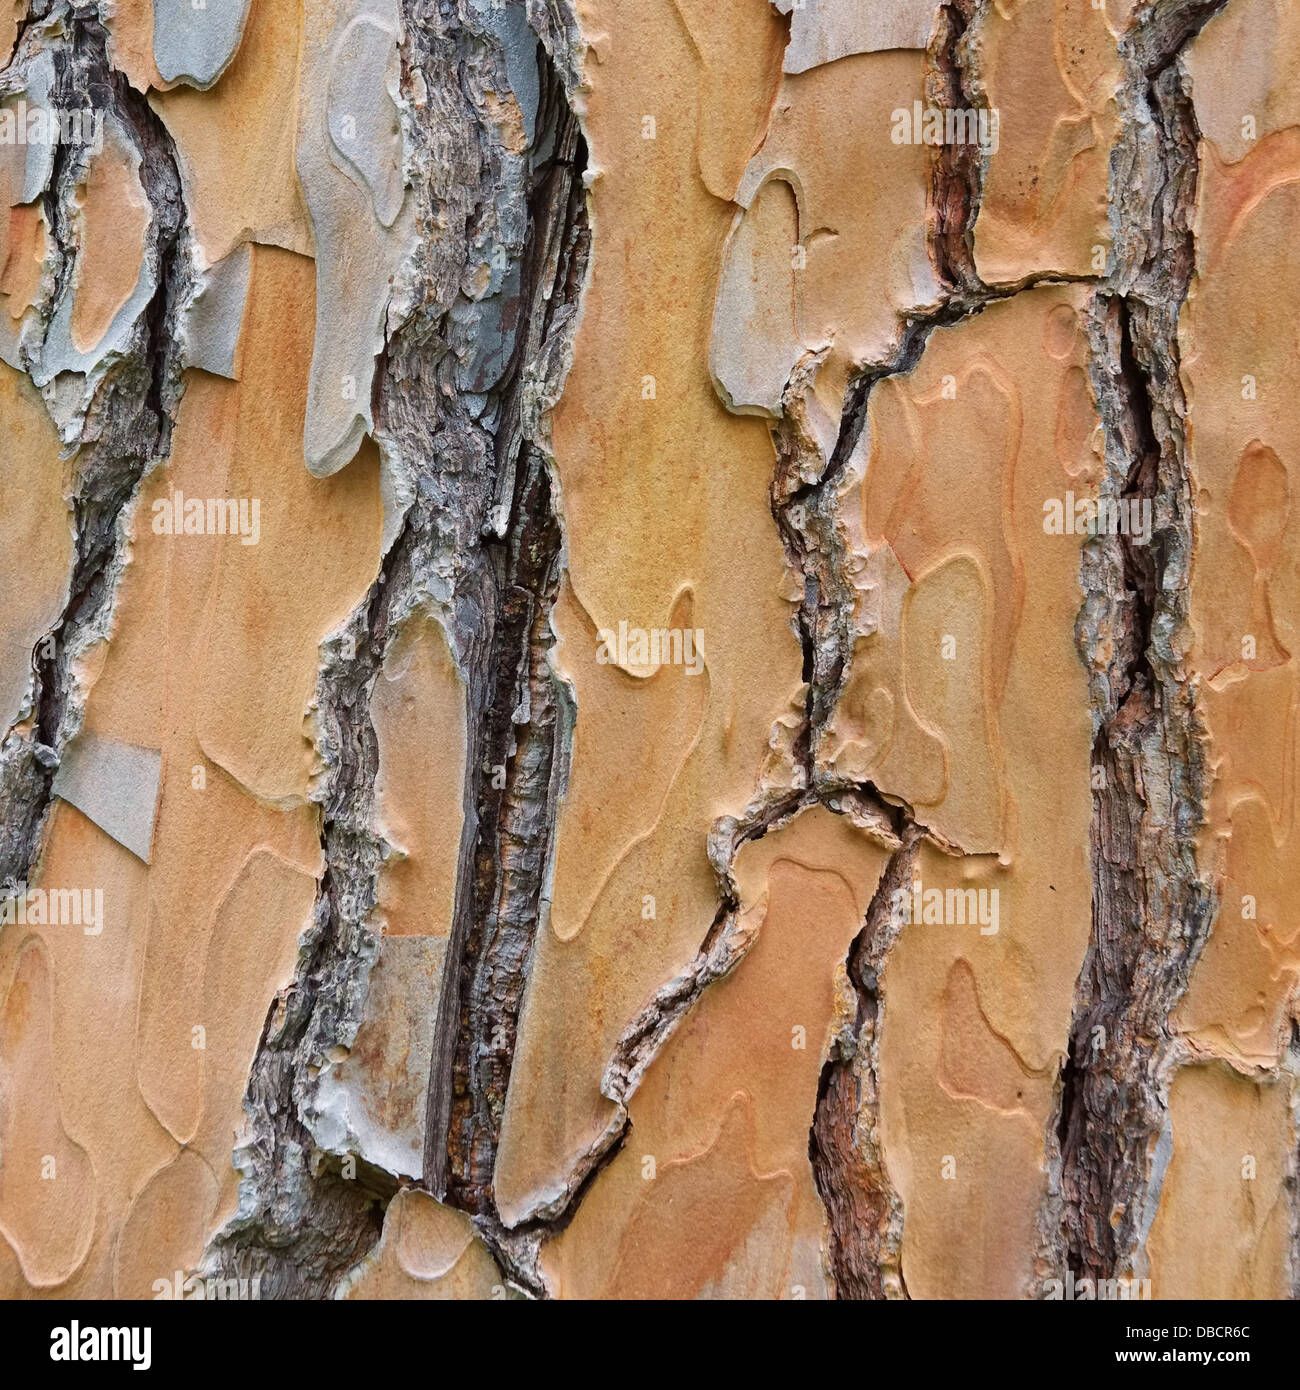 Pinie Rinde - pine bark 04 Stock Photo